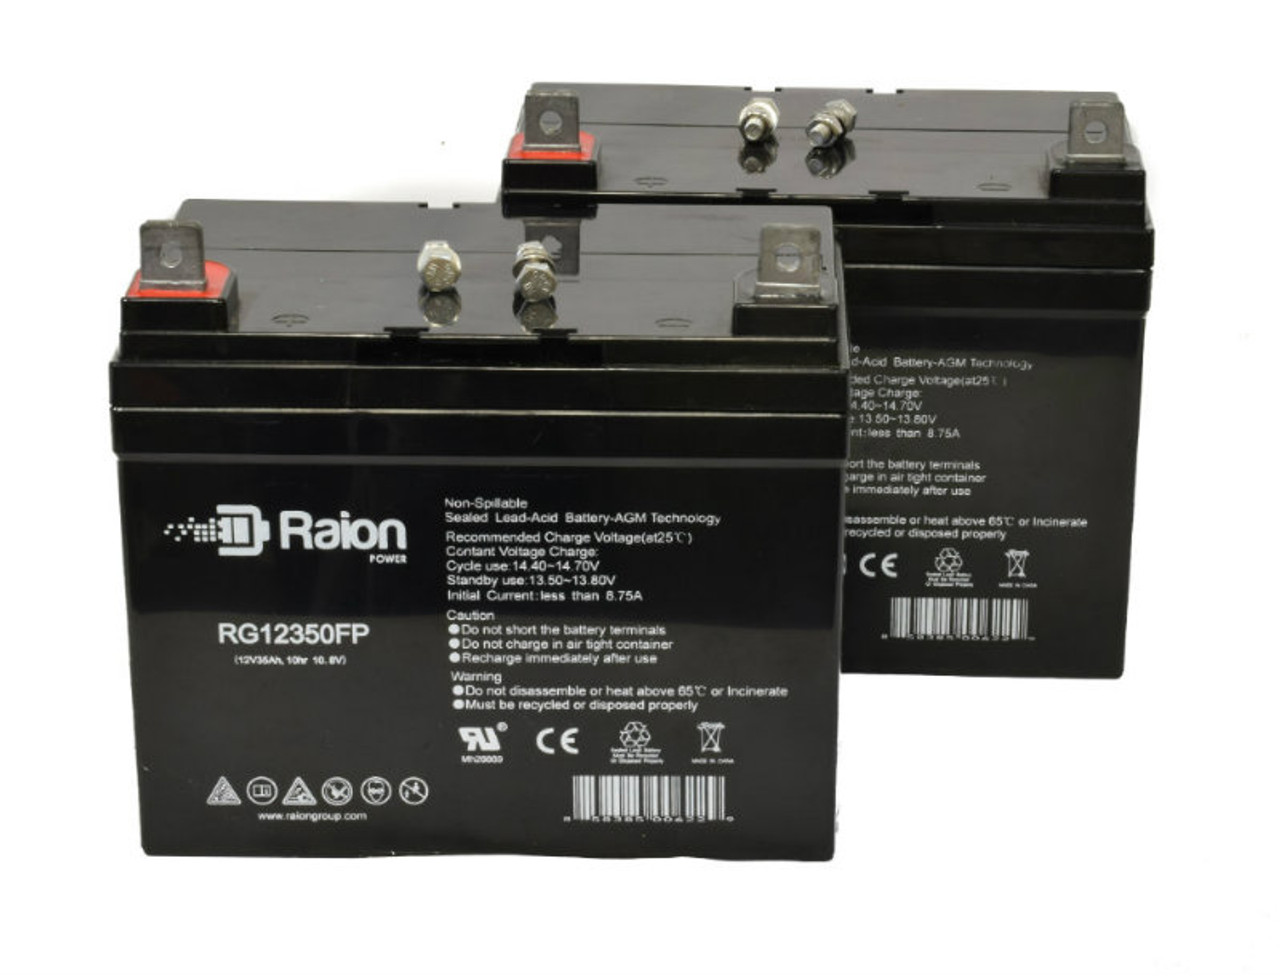 Raion Power Replacement 12V 35Ah Lawn Mower Battery for John Deere 185 - 2 Pack